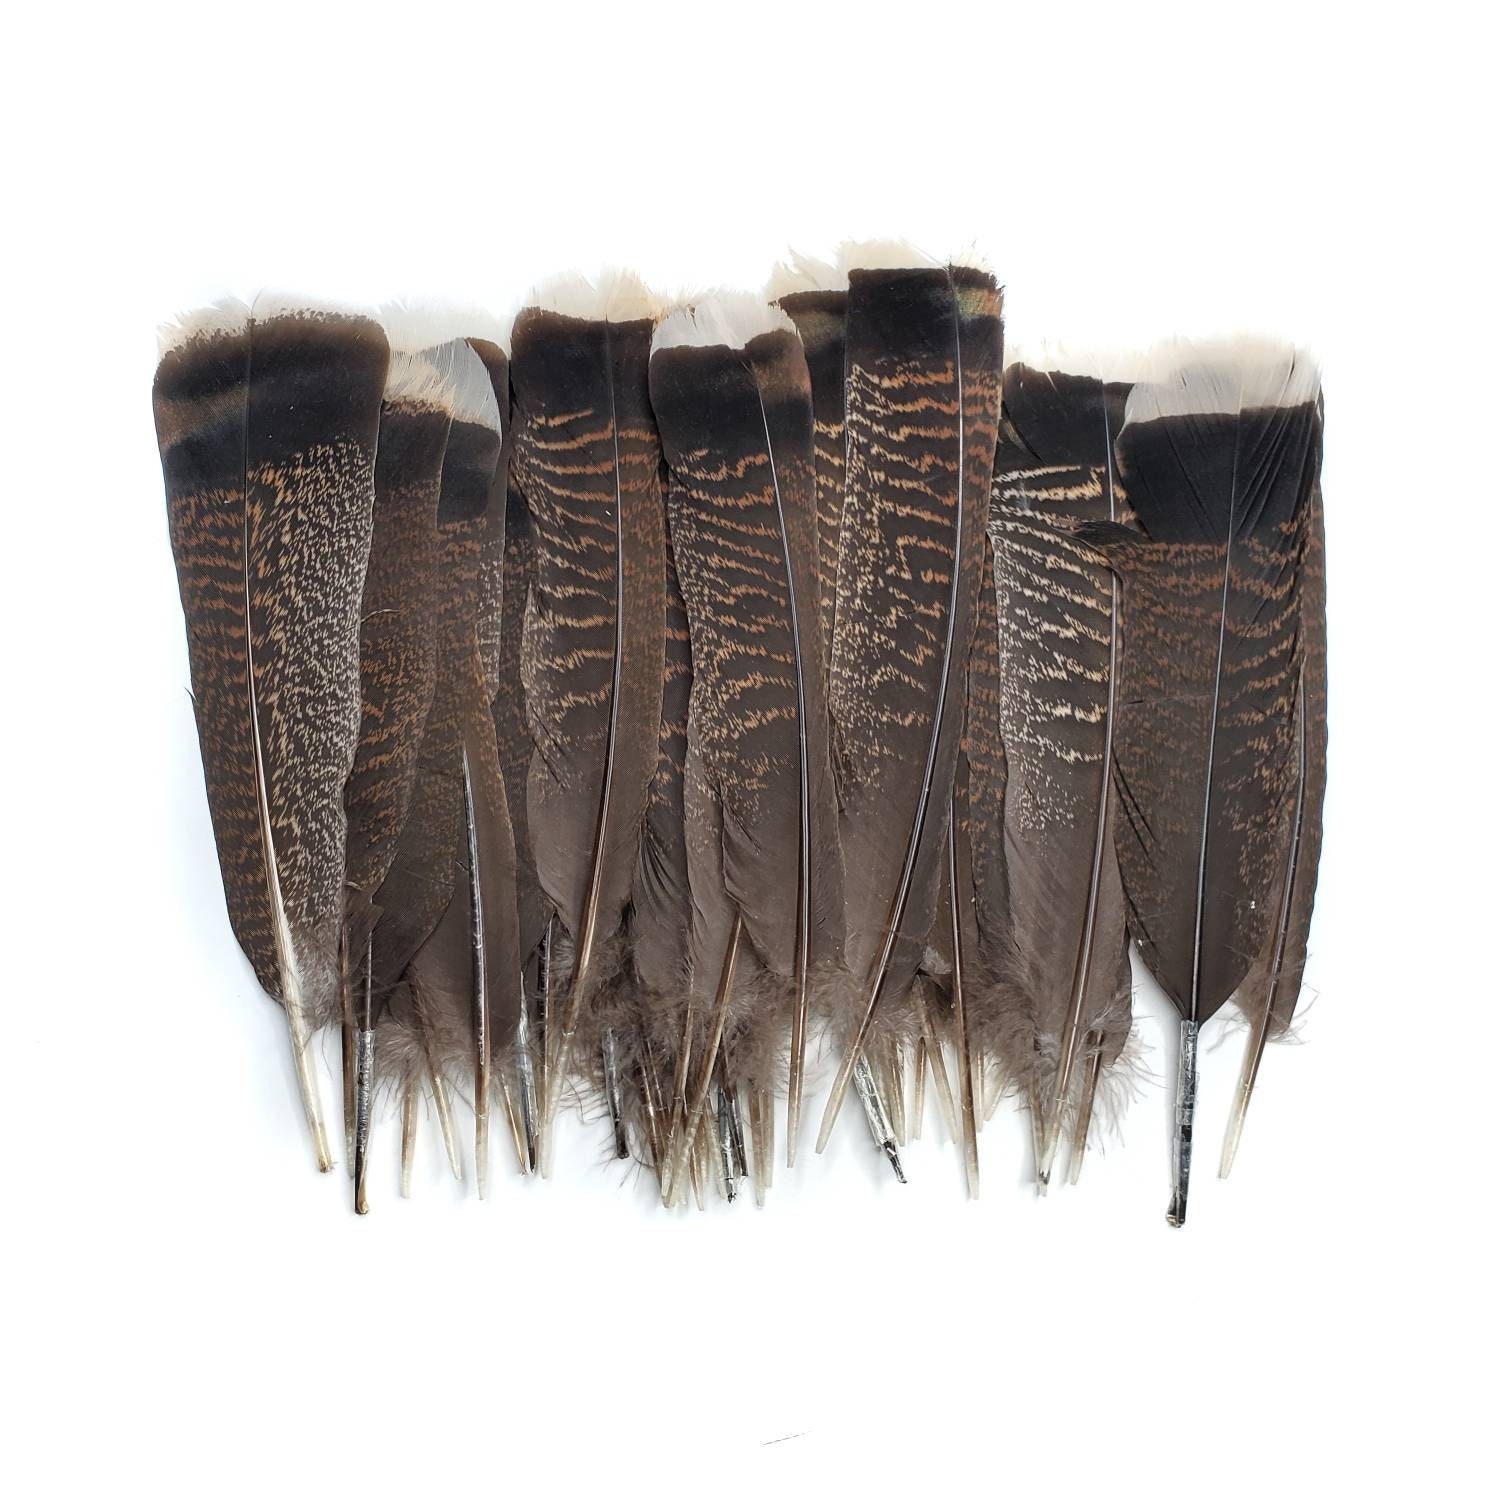 Wild Turkey Tail Feather Stock Photo - Download Image Now